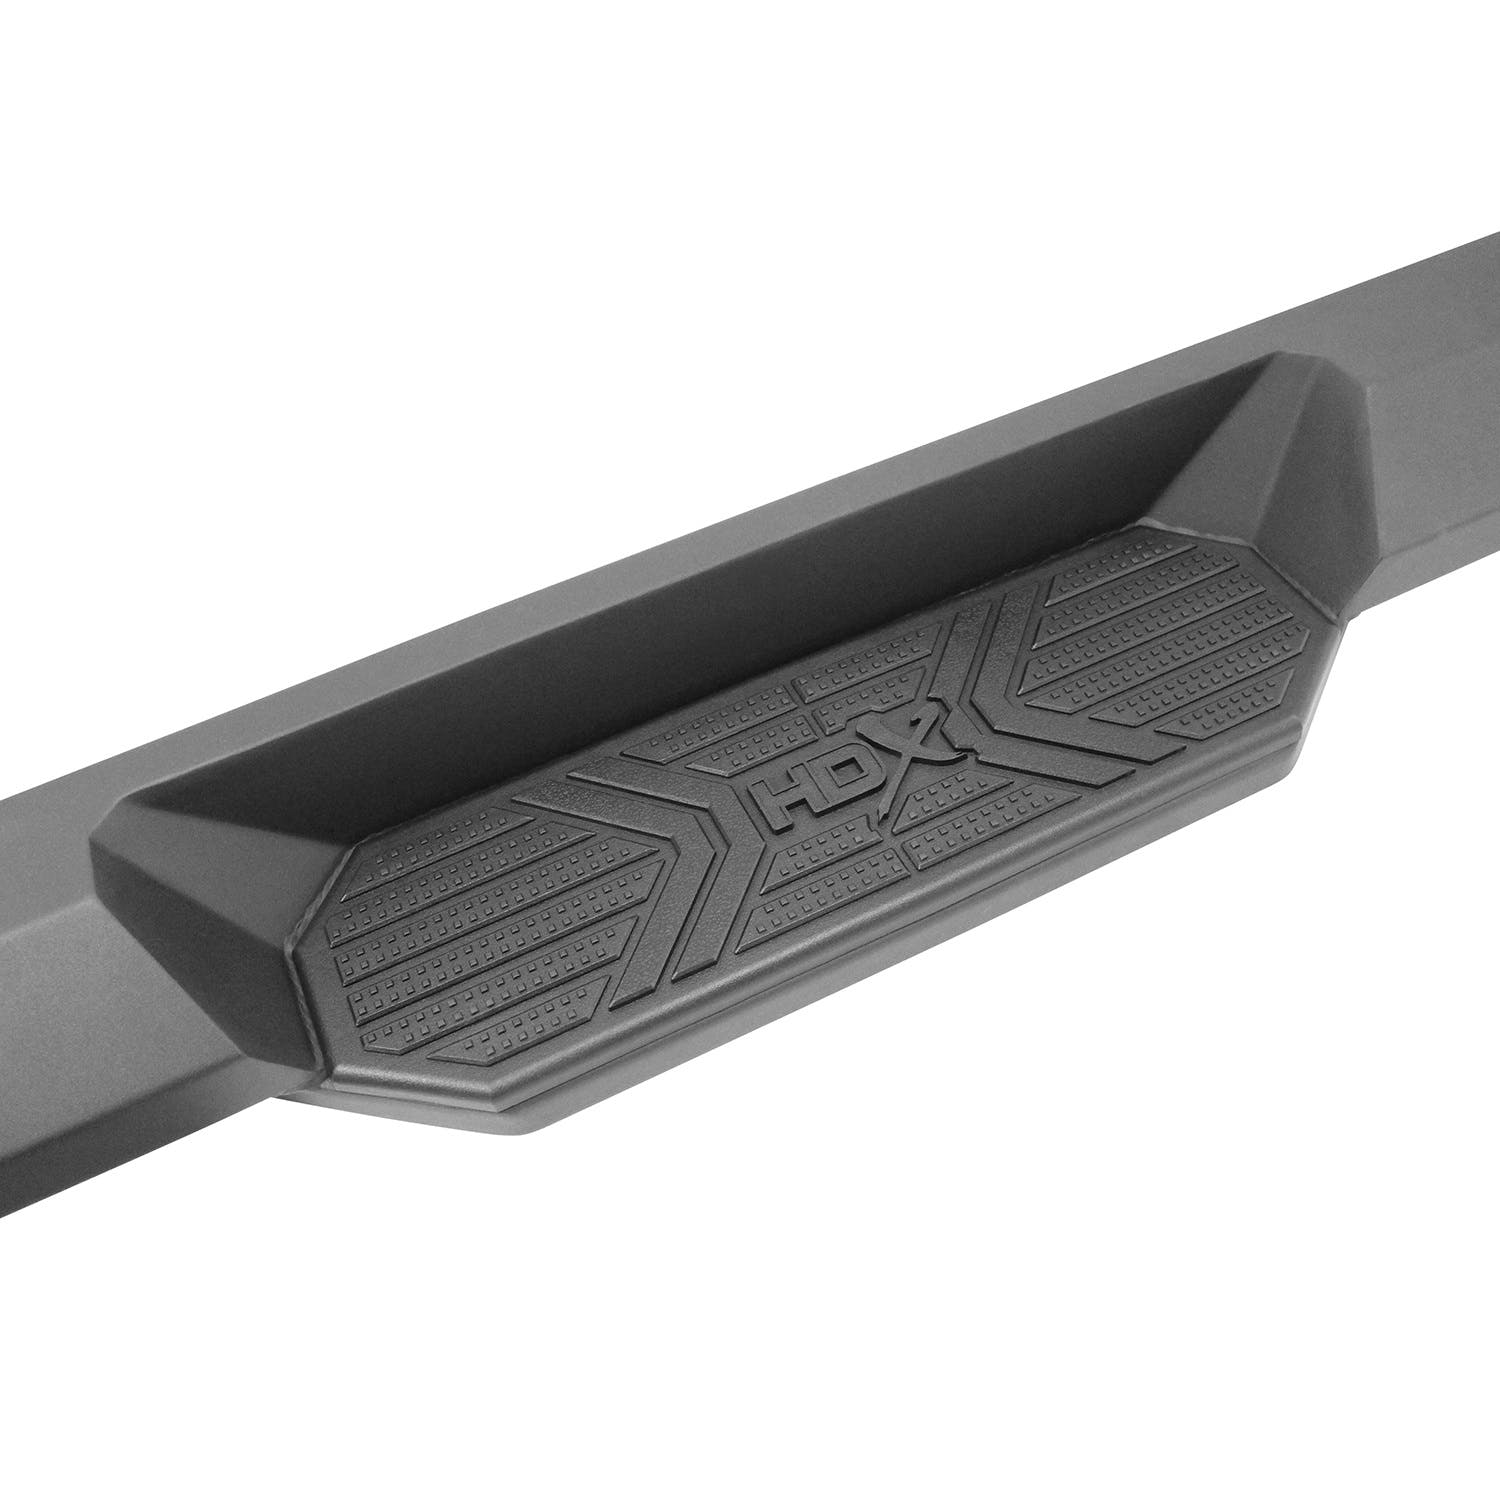 Westin Automotive 56-22775 HDX Xtreme Nerf Step Bars Textured Black